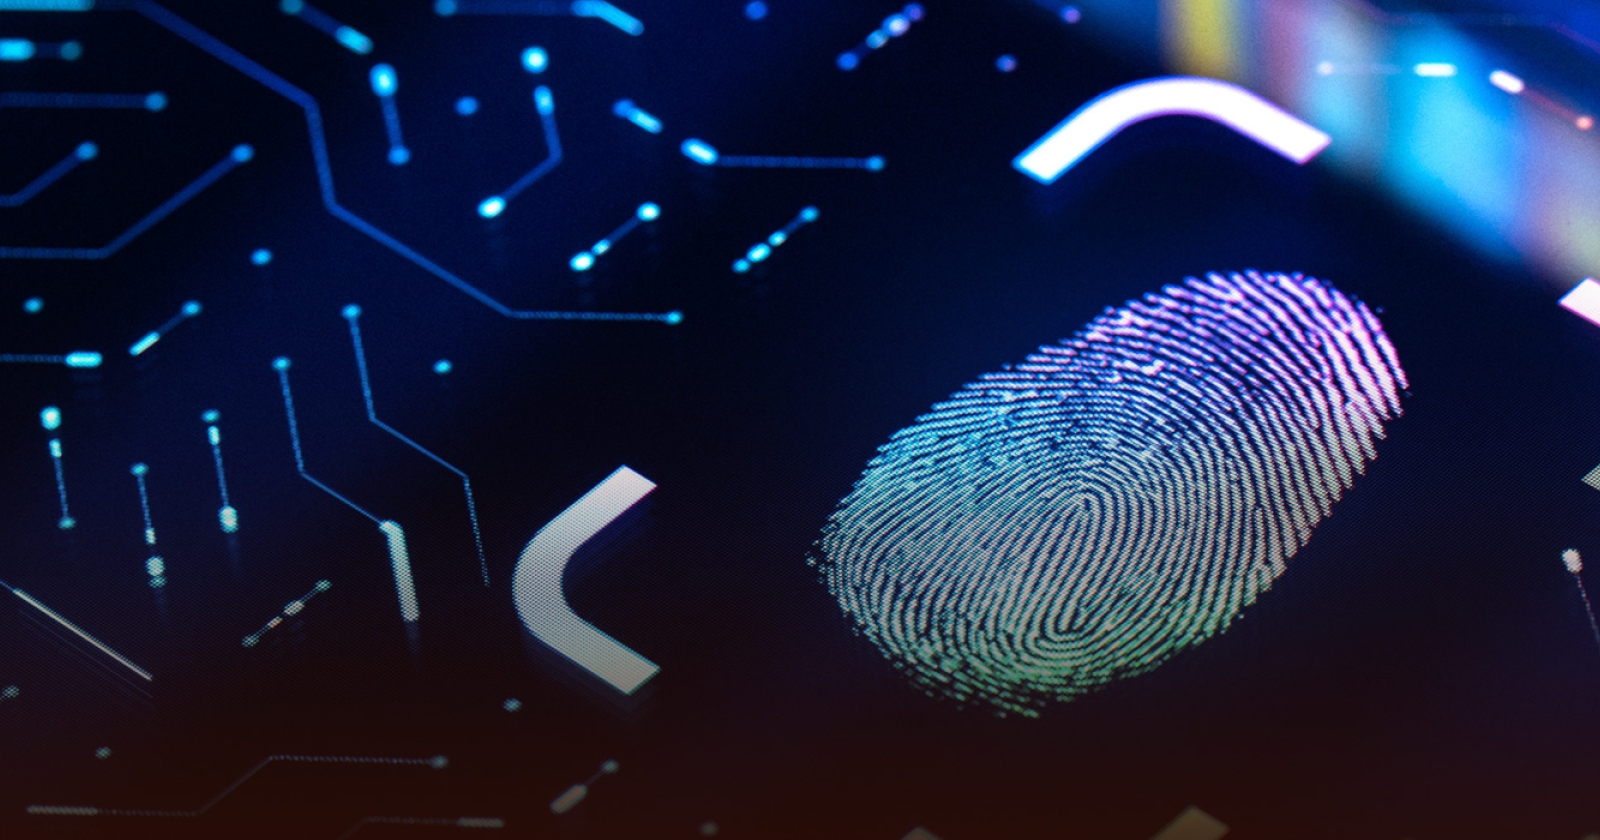 Biometrics fingerprint